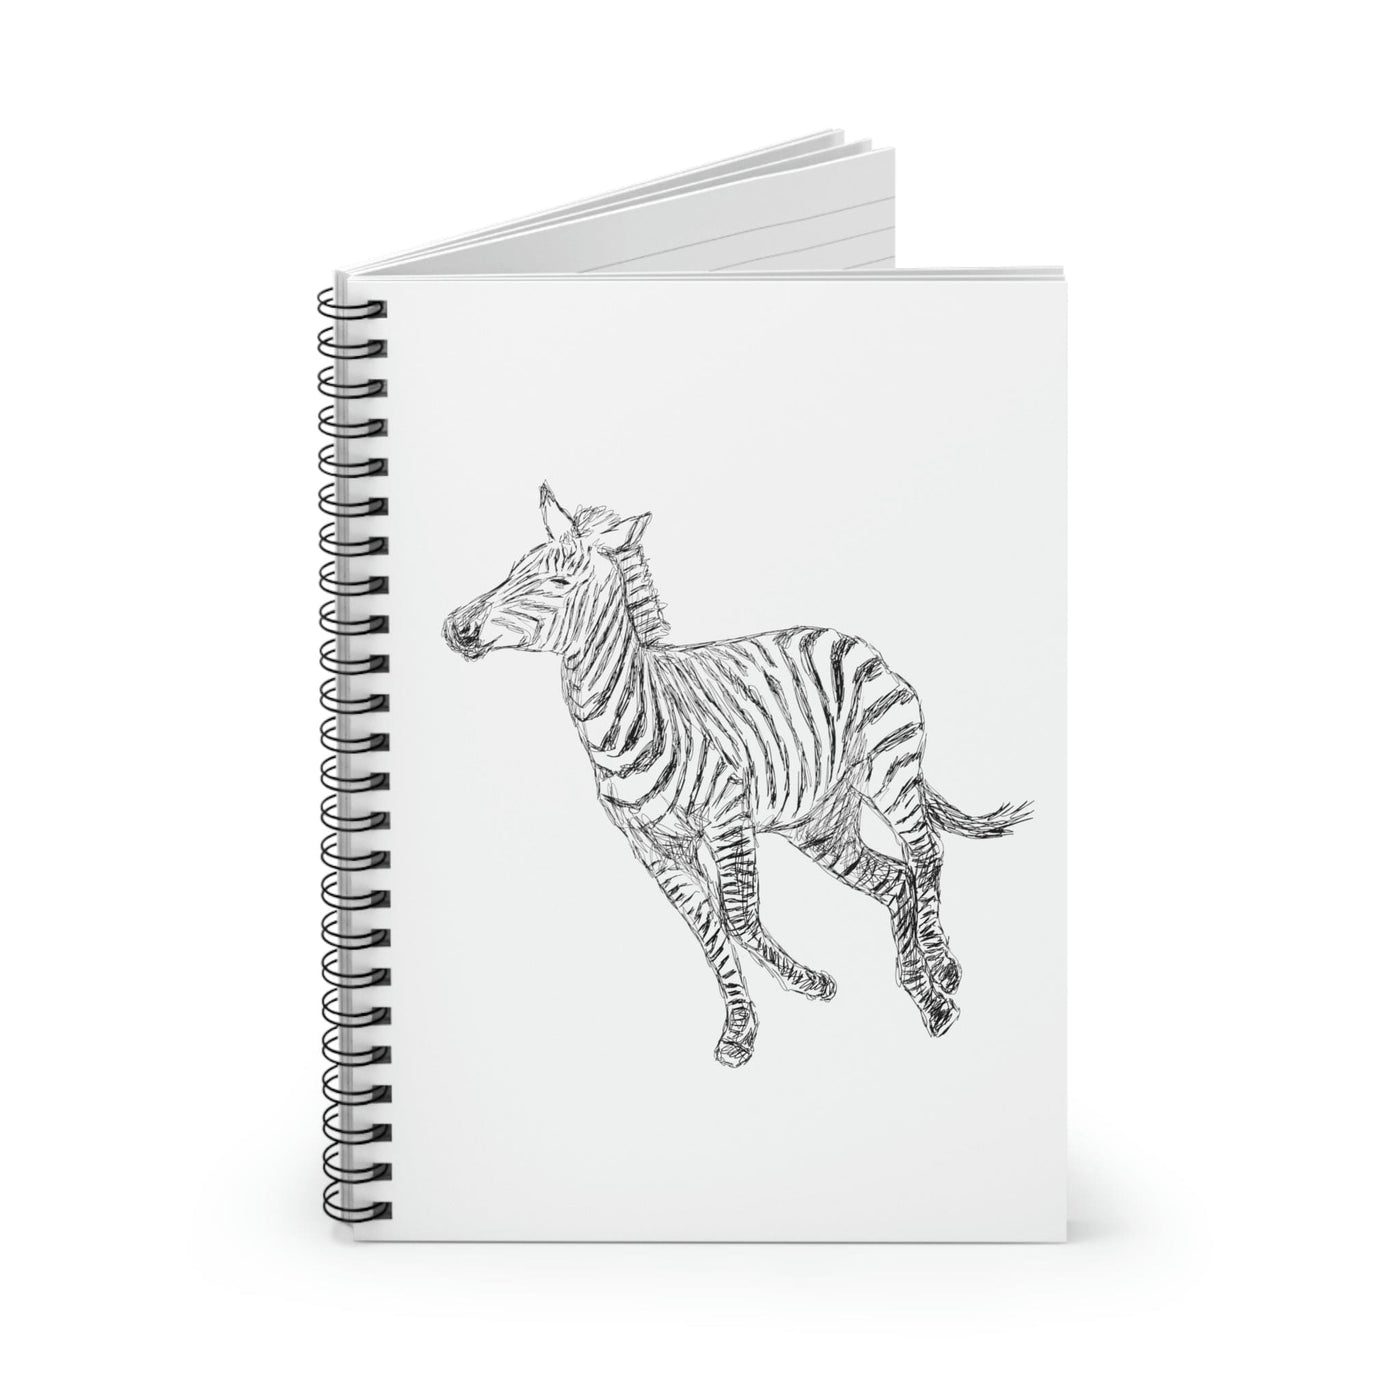 Stationary Spiral White Journal Notebook Galloping Zebra Line Art Drawing Print